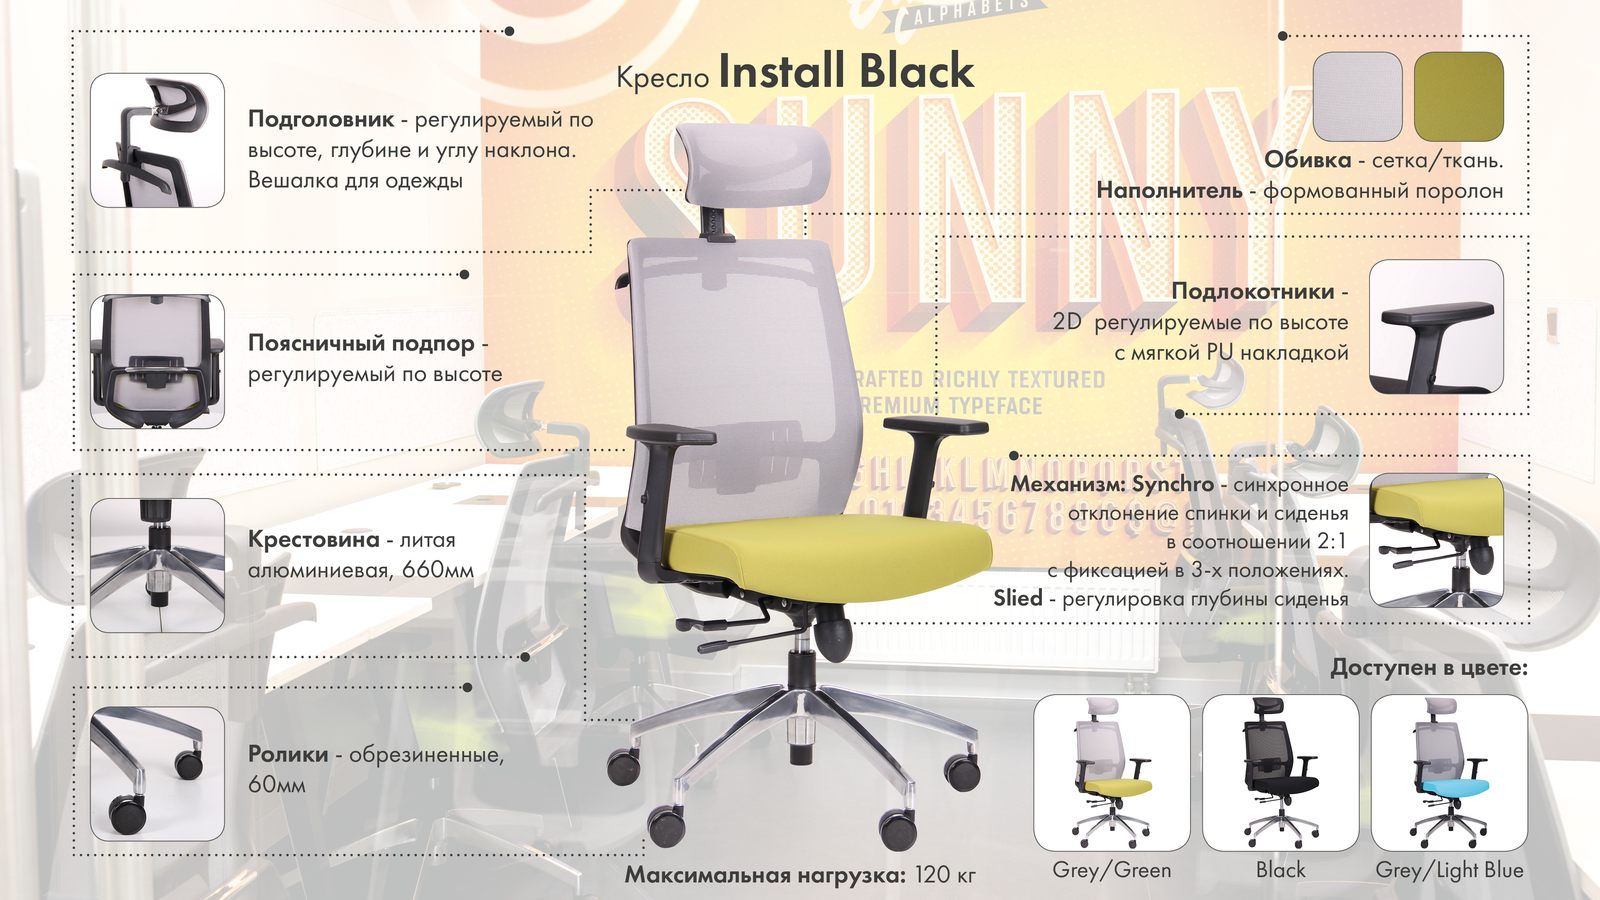 Кресло Install Black описание